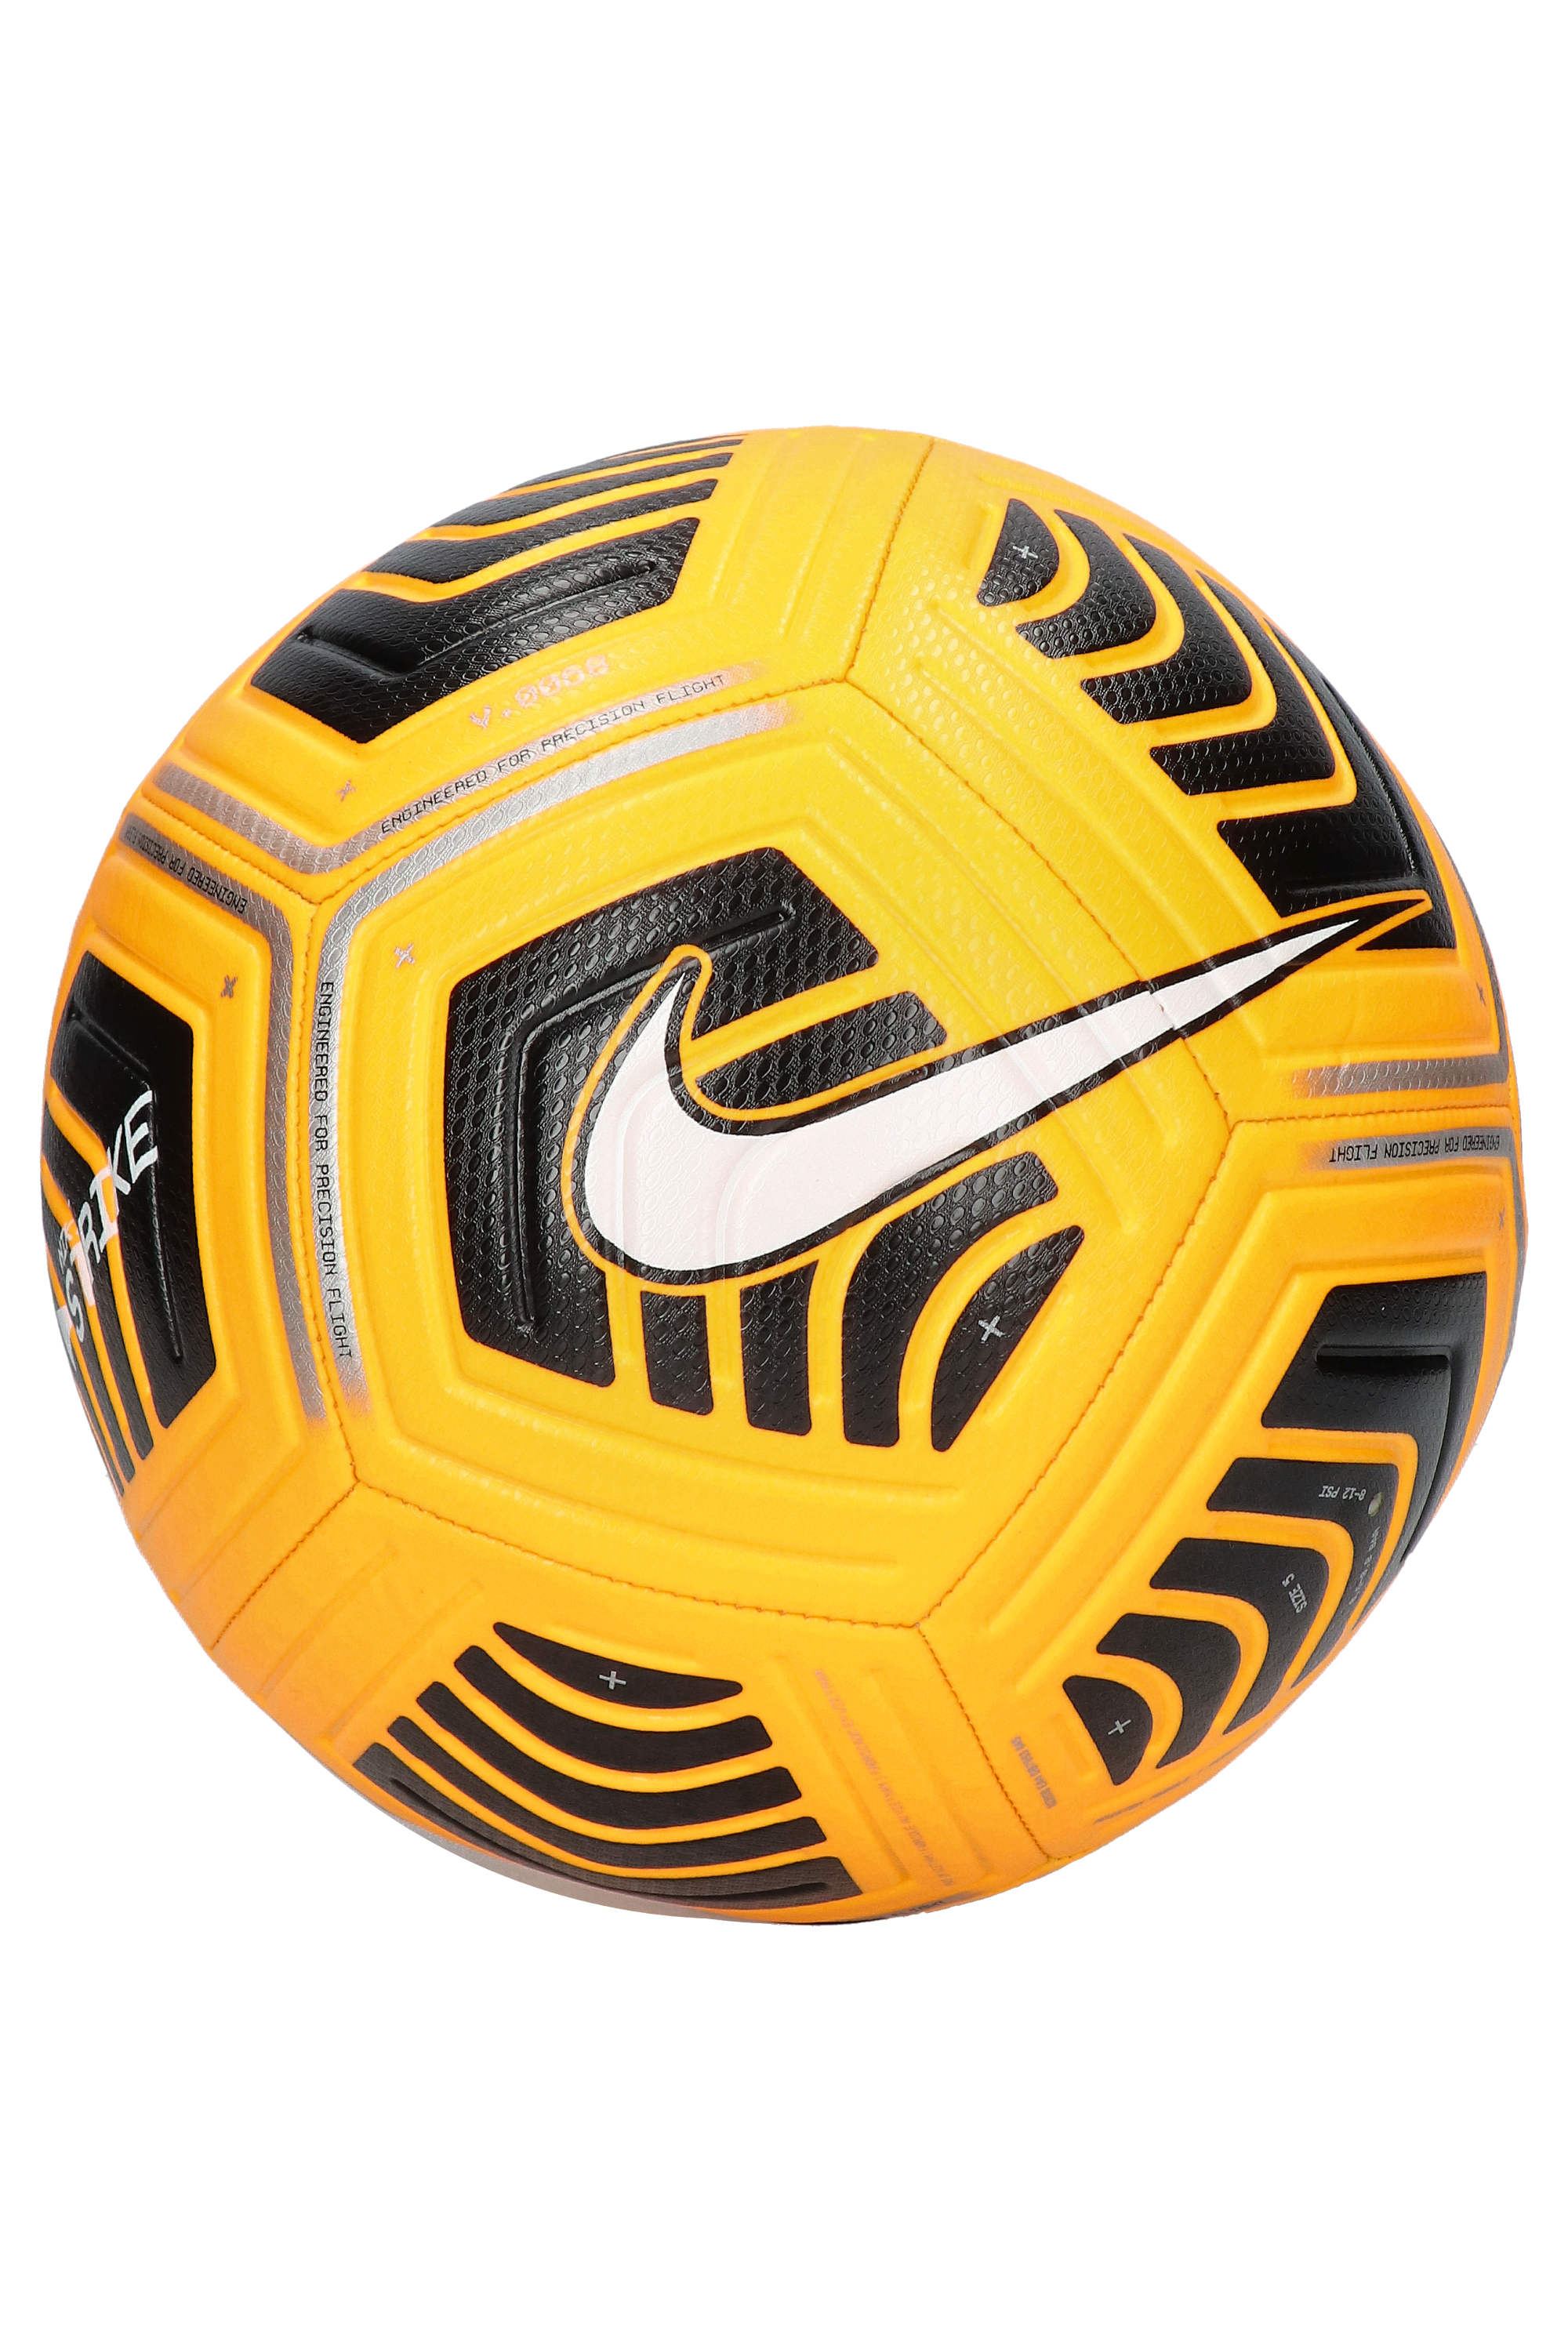 Ball Nike Strike size 5 | R-GOL.com - &